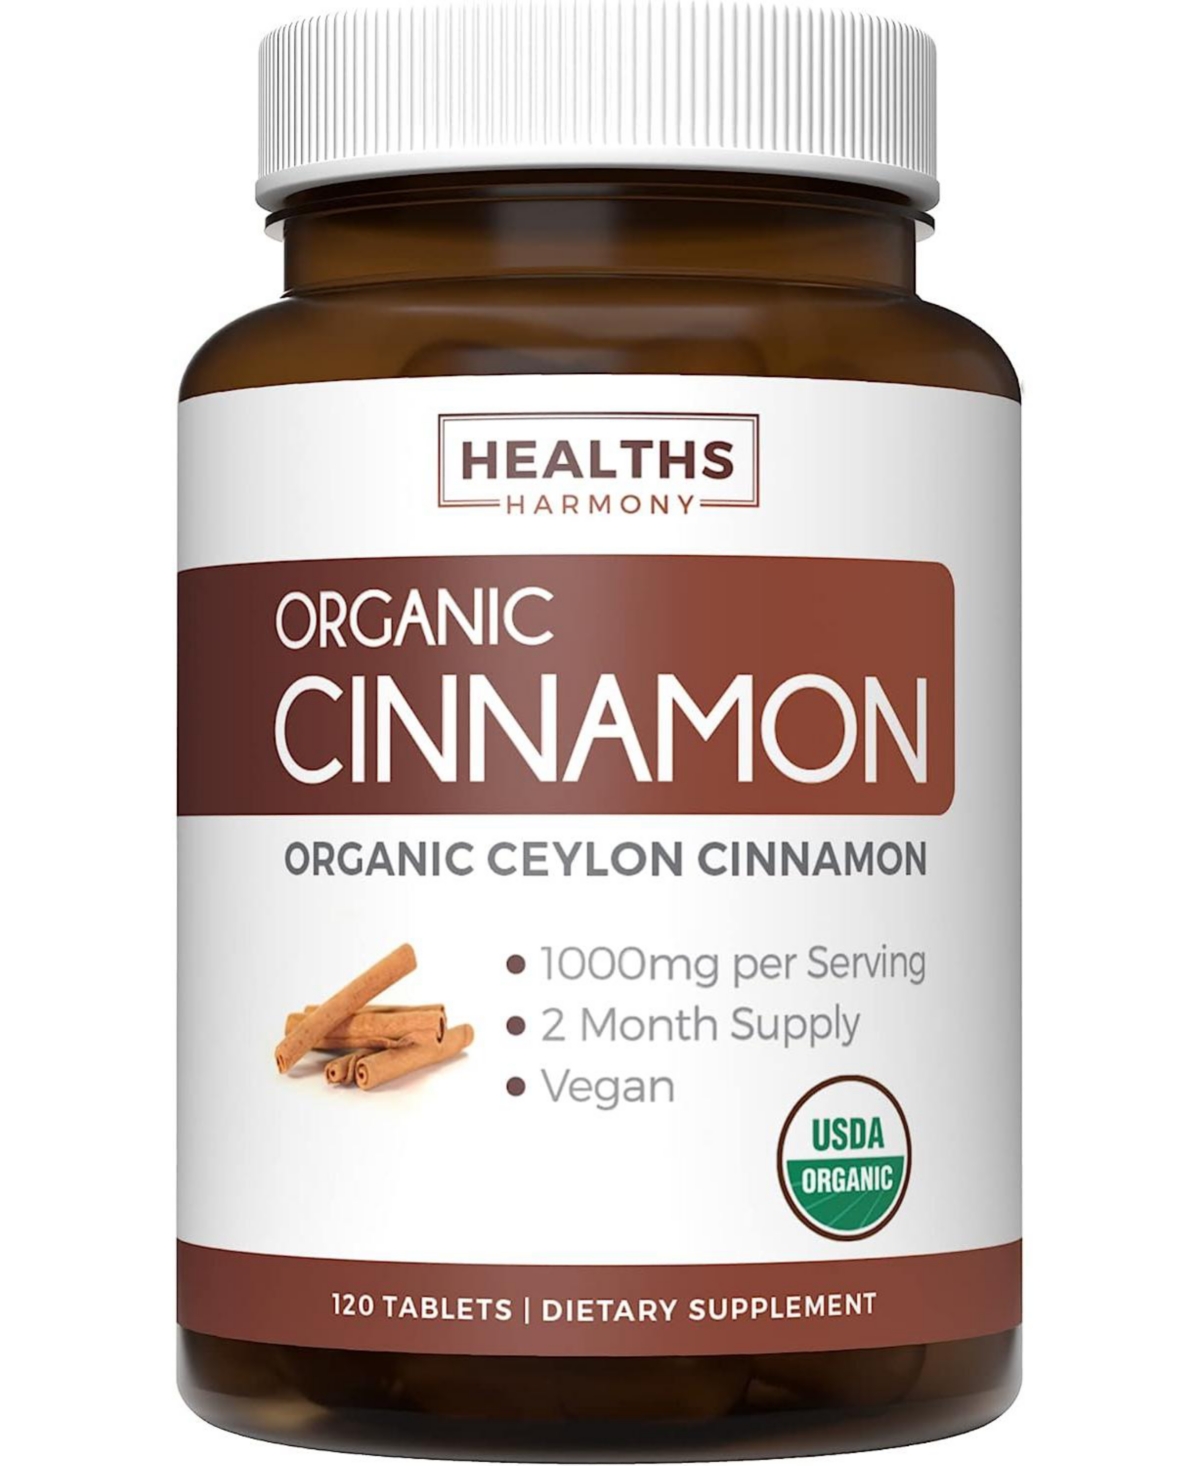 Usda Organic Ceylon Cinnamon 1000mg per Serving - Cinnamon Bark Supplement for Natural Support - 120 Tablets